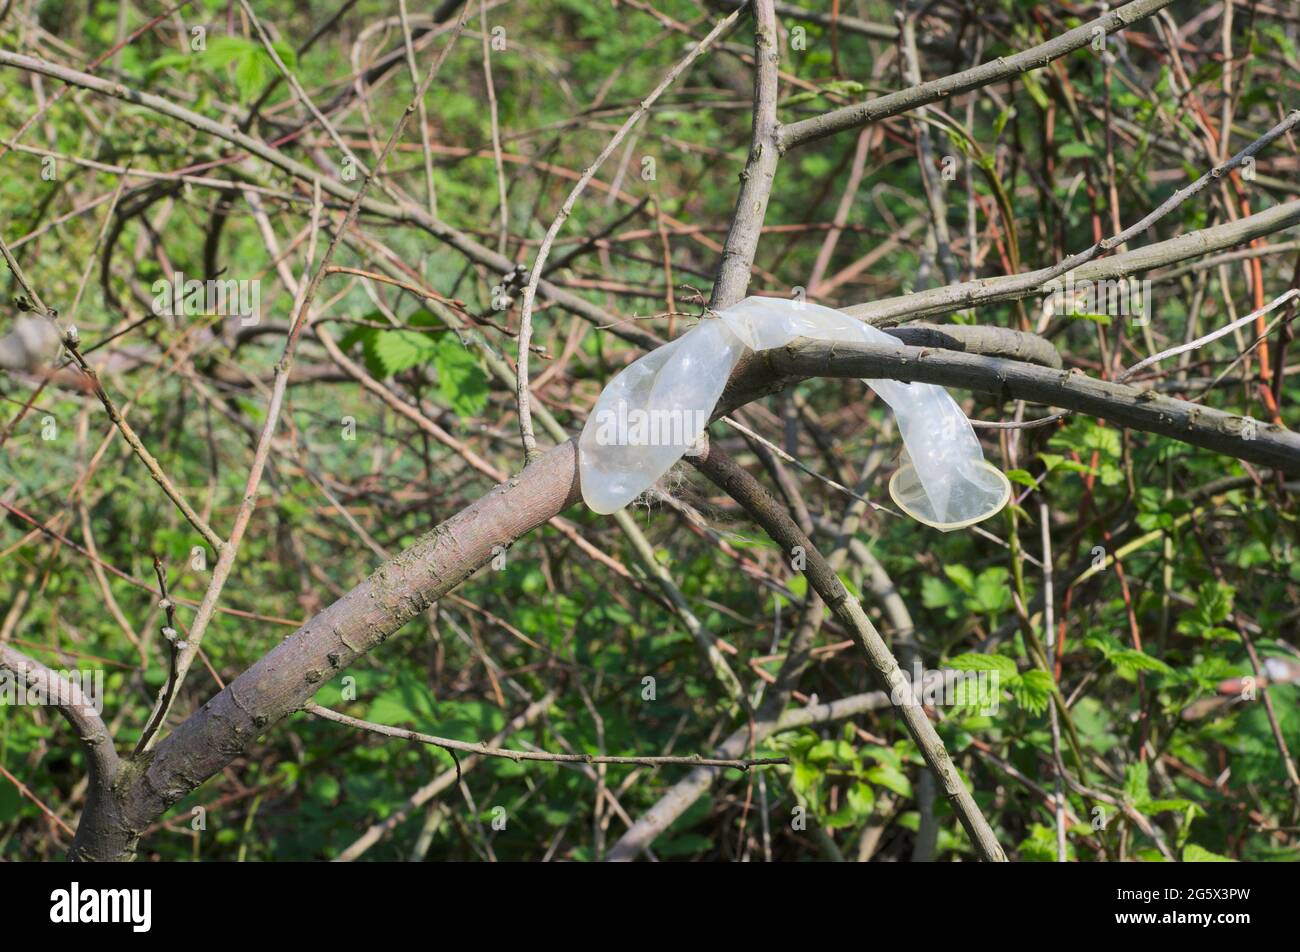 used condom abandoned on a bush Stock Photo